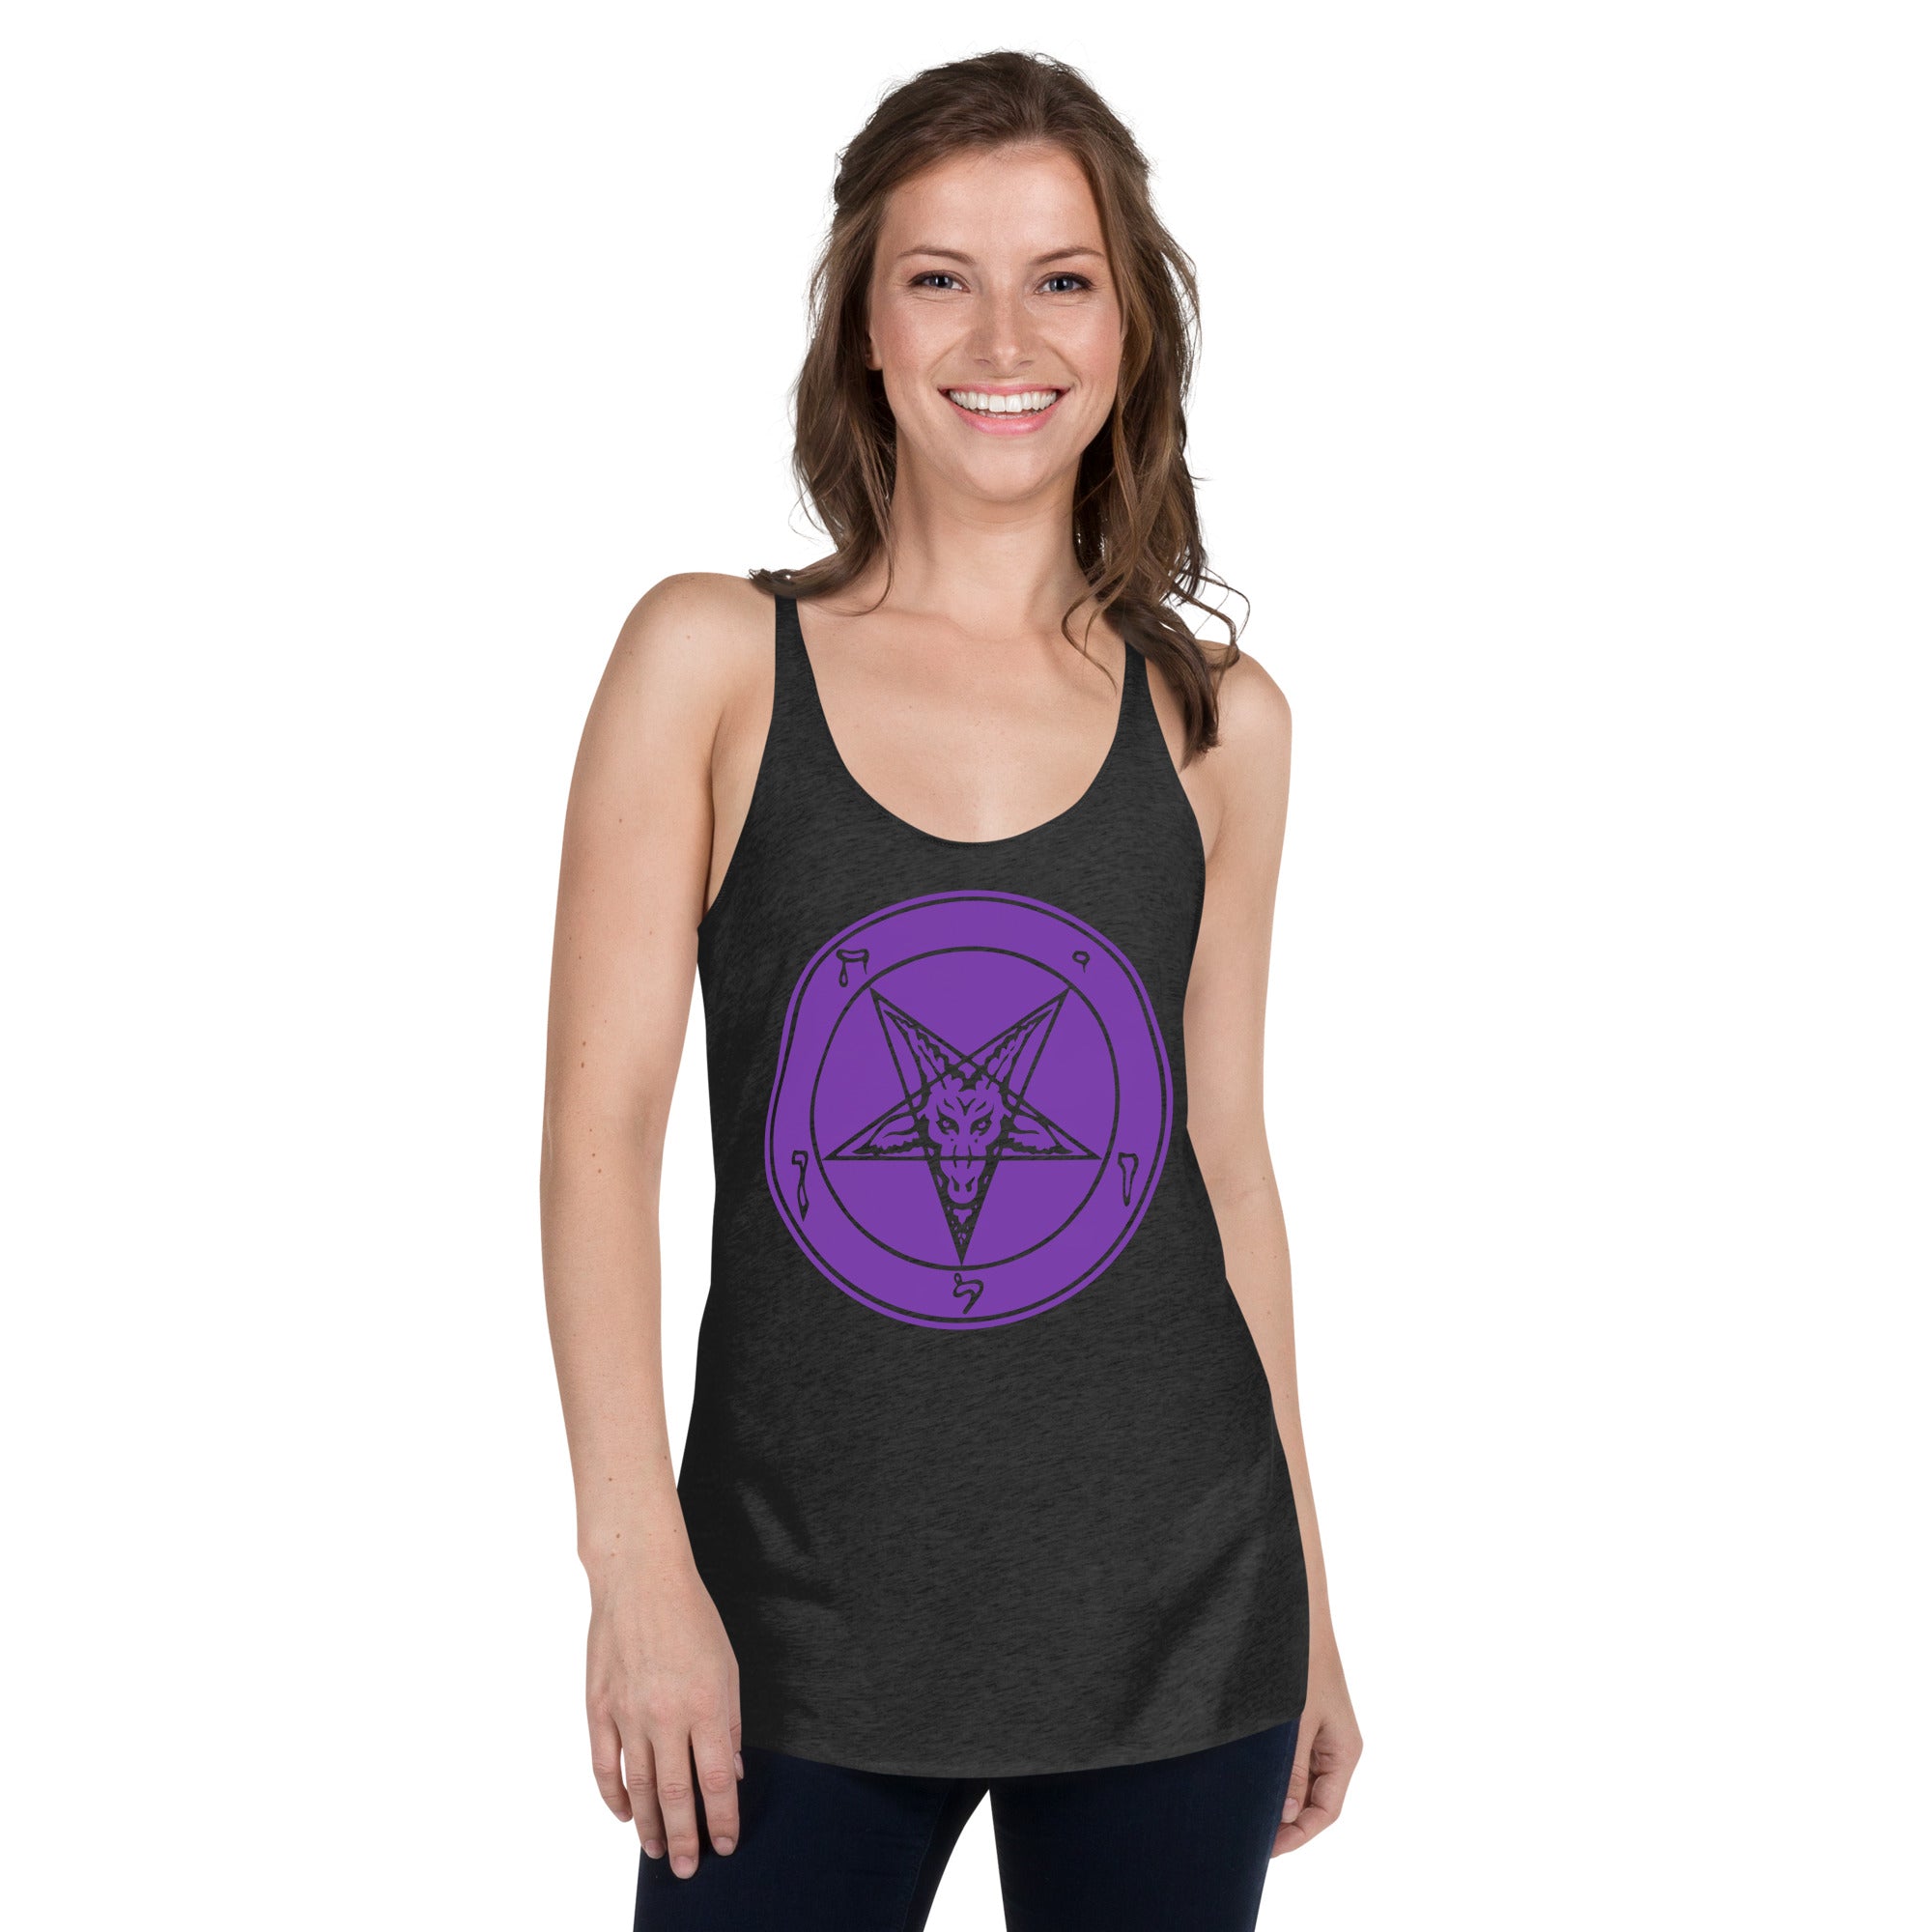 Classic Sigil of Baphomet Goat Head Pentagram Women's Racerback Tank Top Shirt Purple Print - Edge of Life Designs